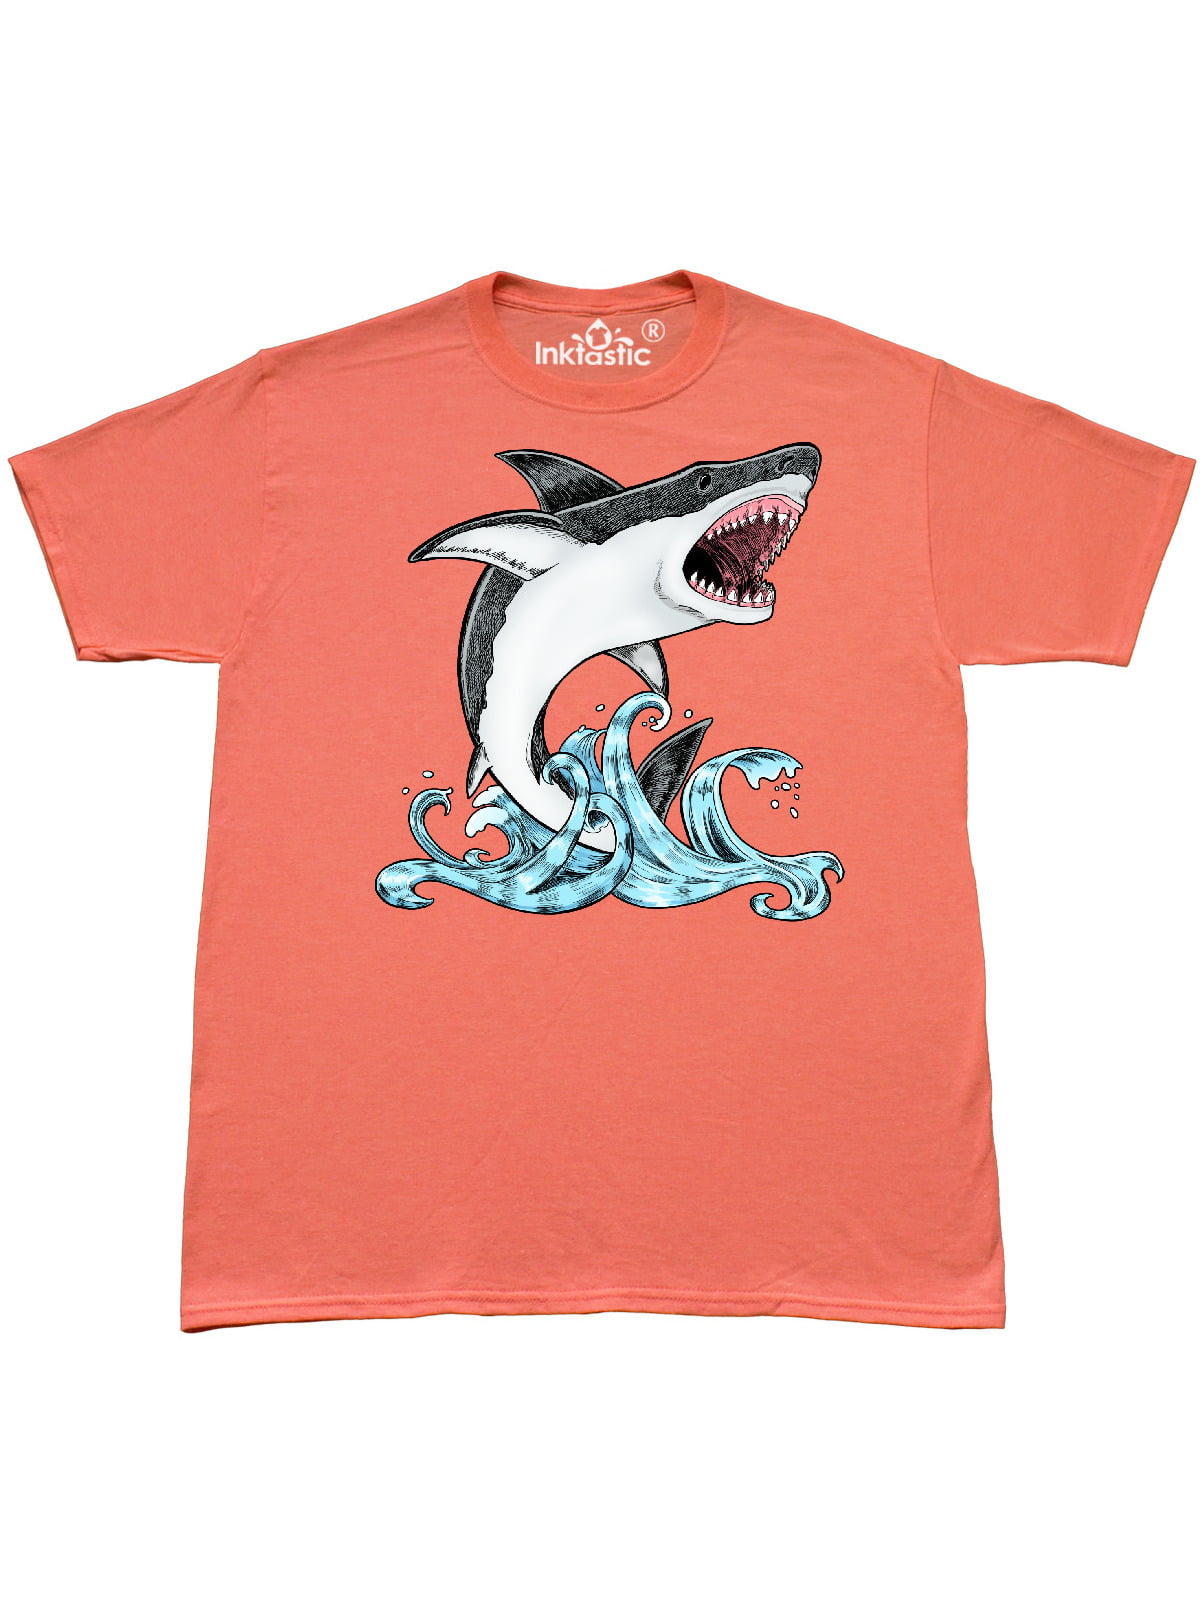 INKtastic - Great White Shark Jumping T-Shirt - Walmart.com - Walmart.com